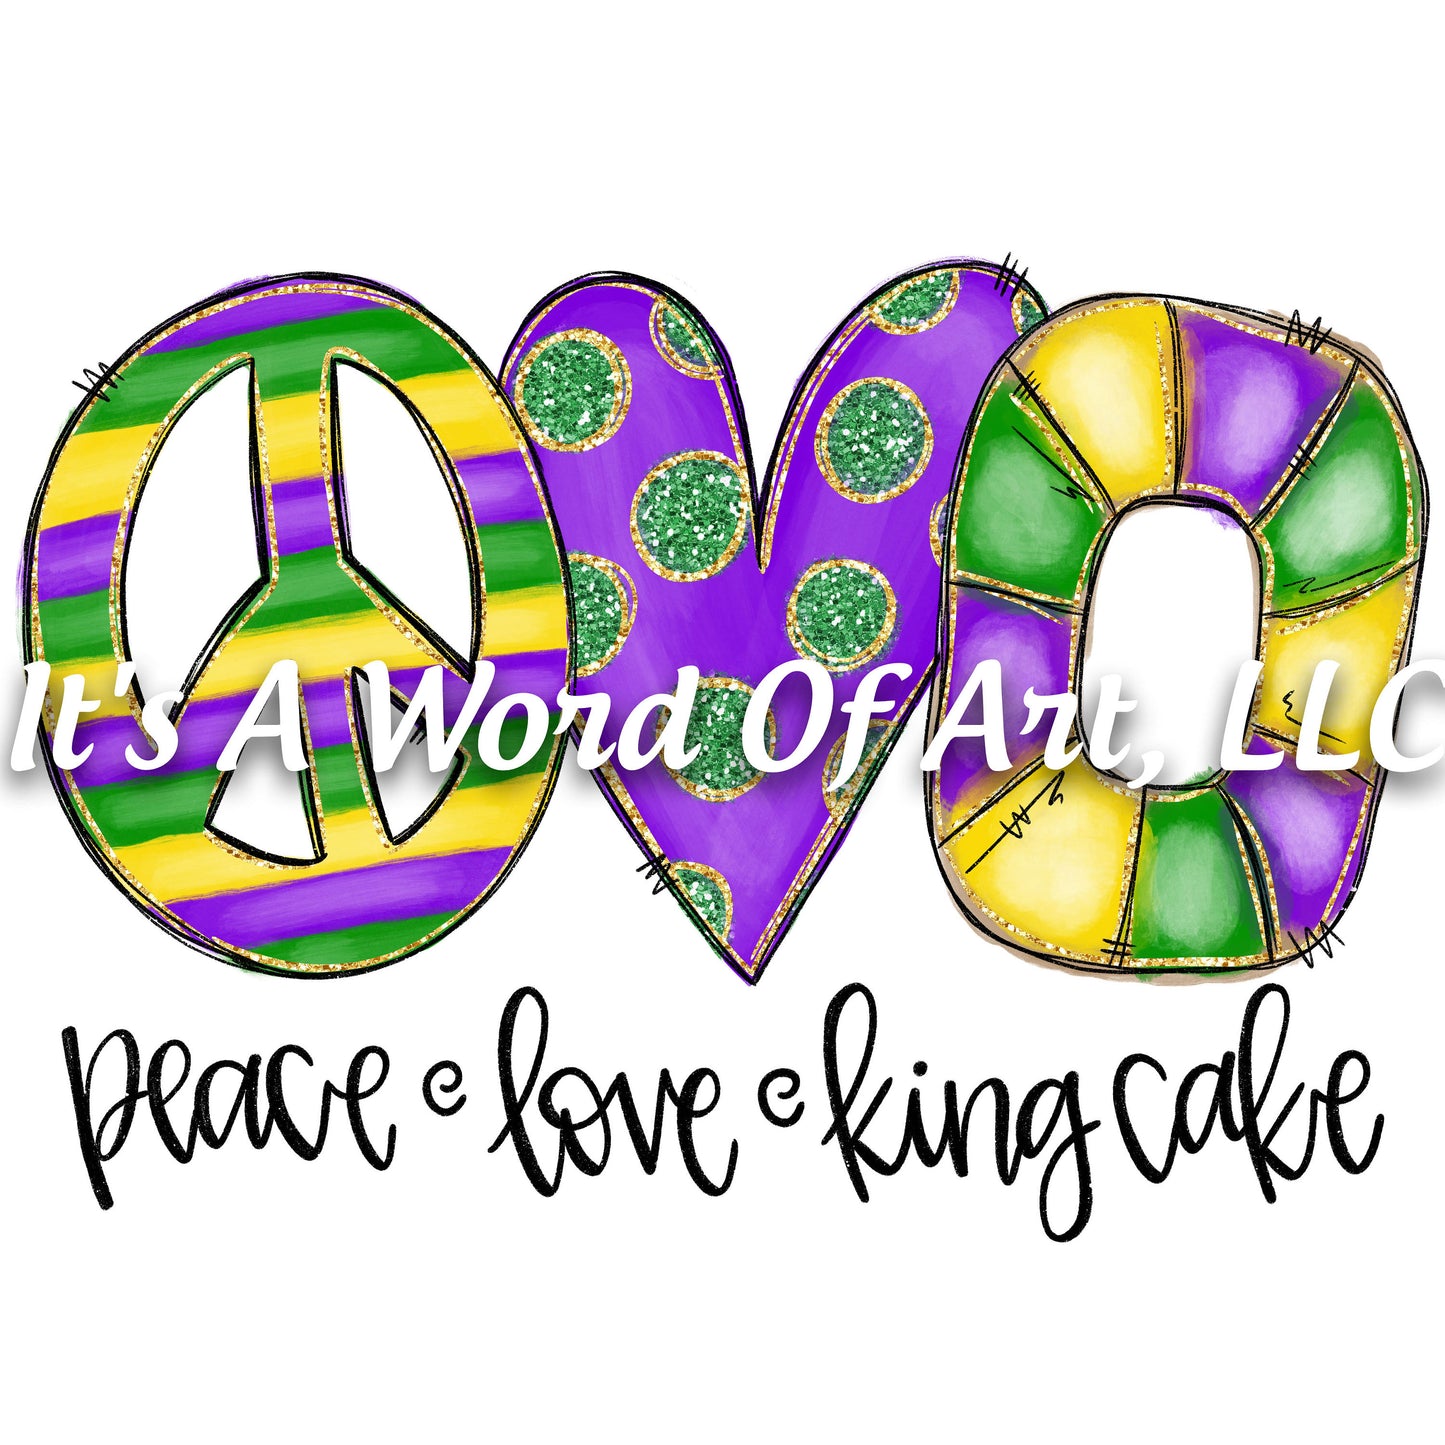 Mardi Gras 15 - Peace Love King Cake Fleur De Lis- Sublimation Transfer Set/Ready To Press Sublimation Transfer/Sublimation Transfer